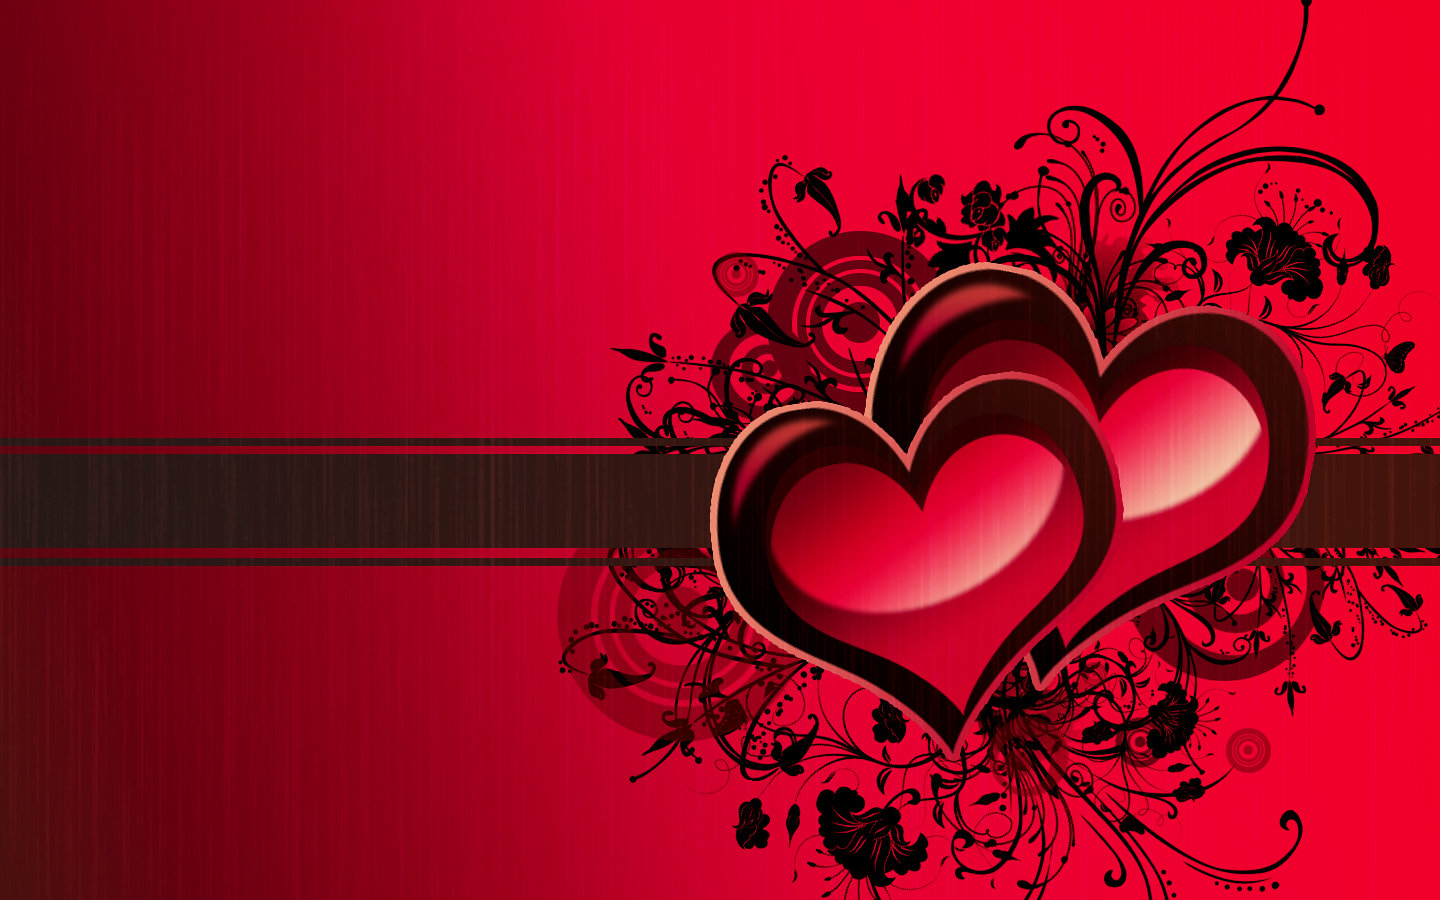 This is your heart. Красивый фон с сердечками. Картинки на рабочий стол сердечки. Фон для влюбленных. Красивый фон для влюбленных.